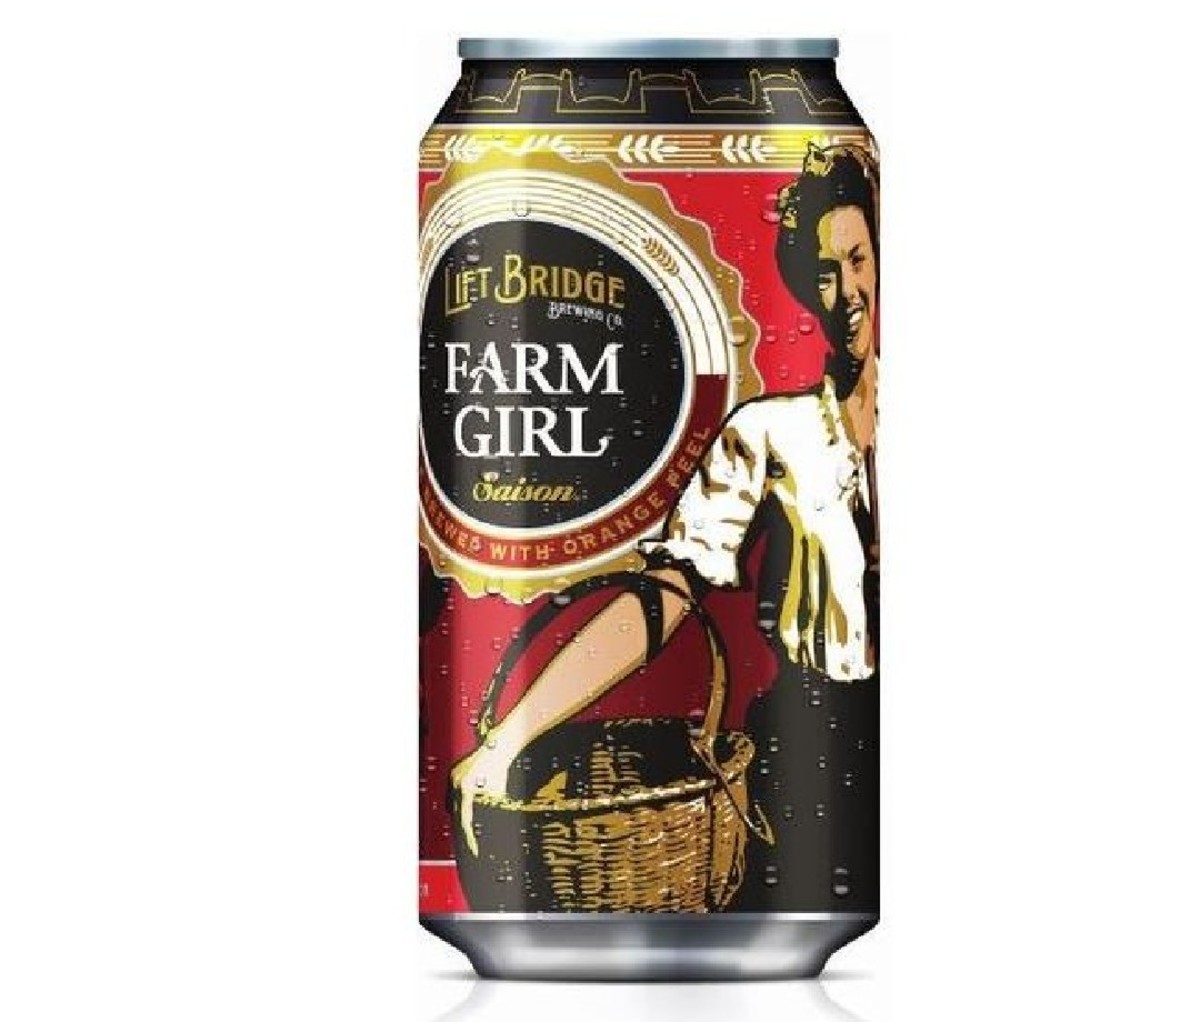 Can of Lift Bridge Farm Girl beer